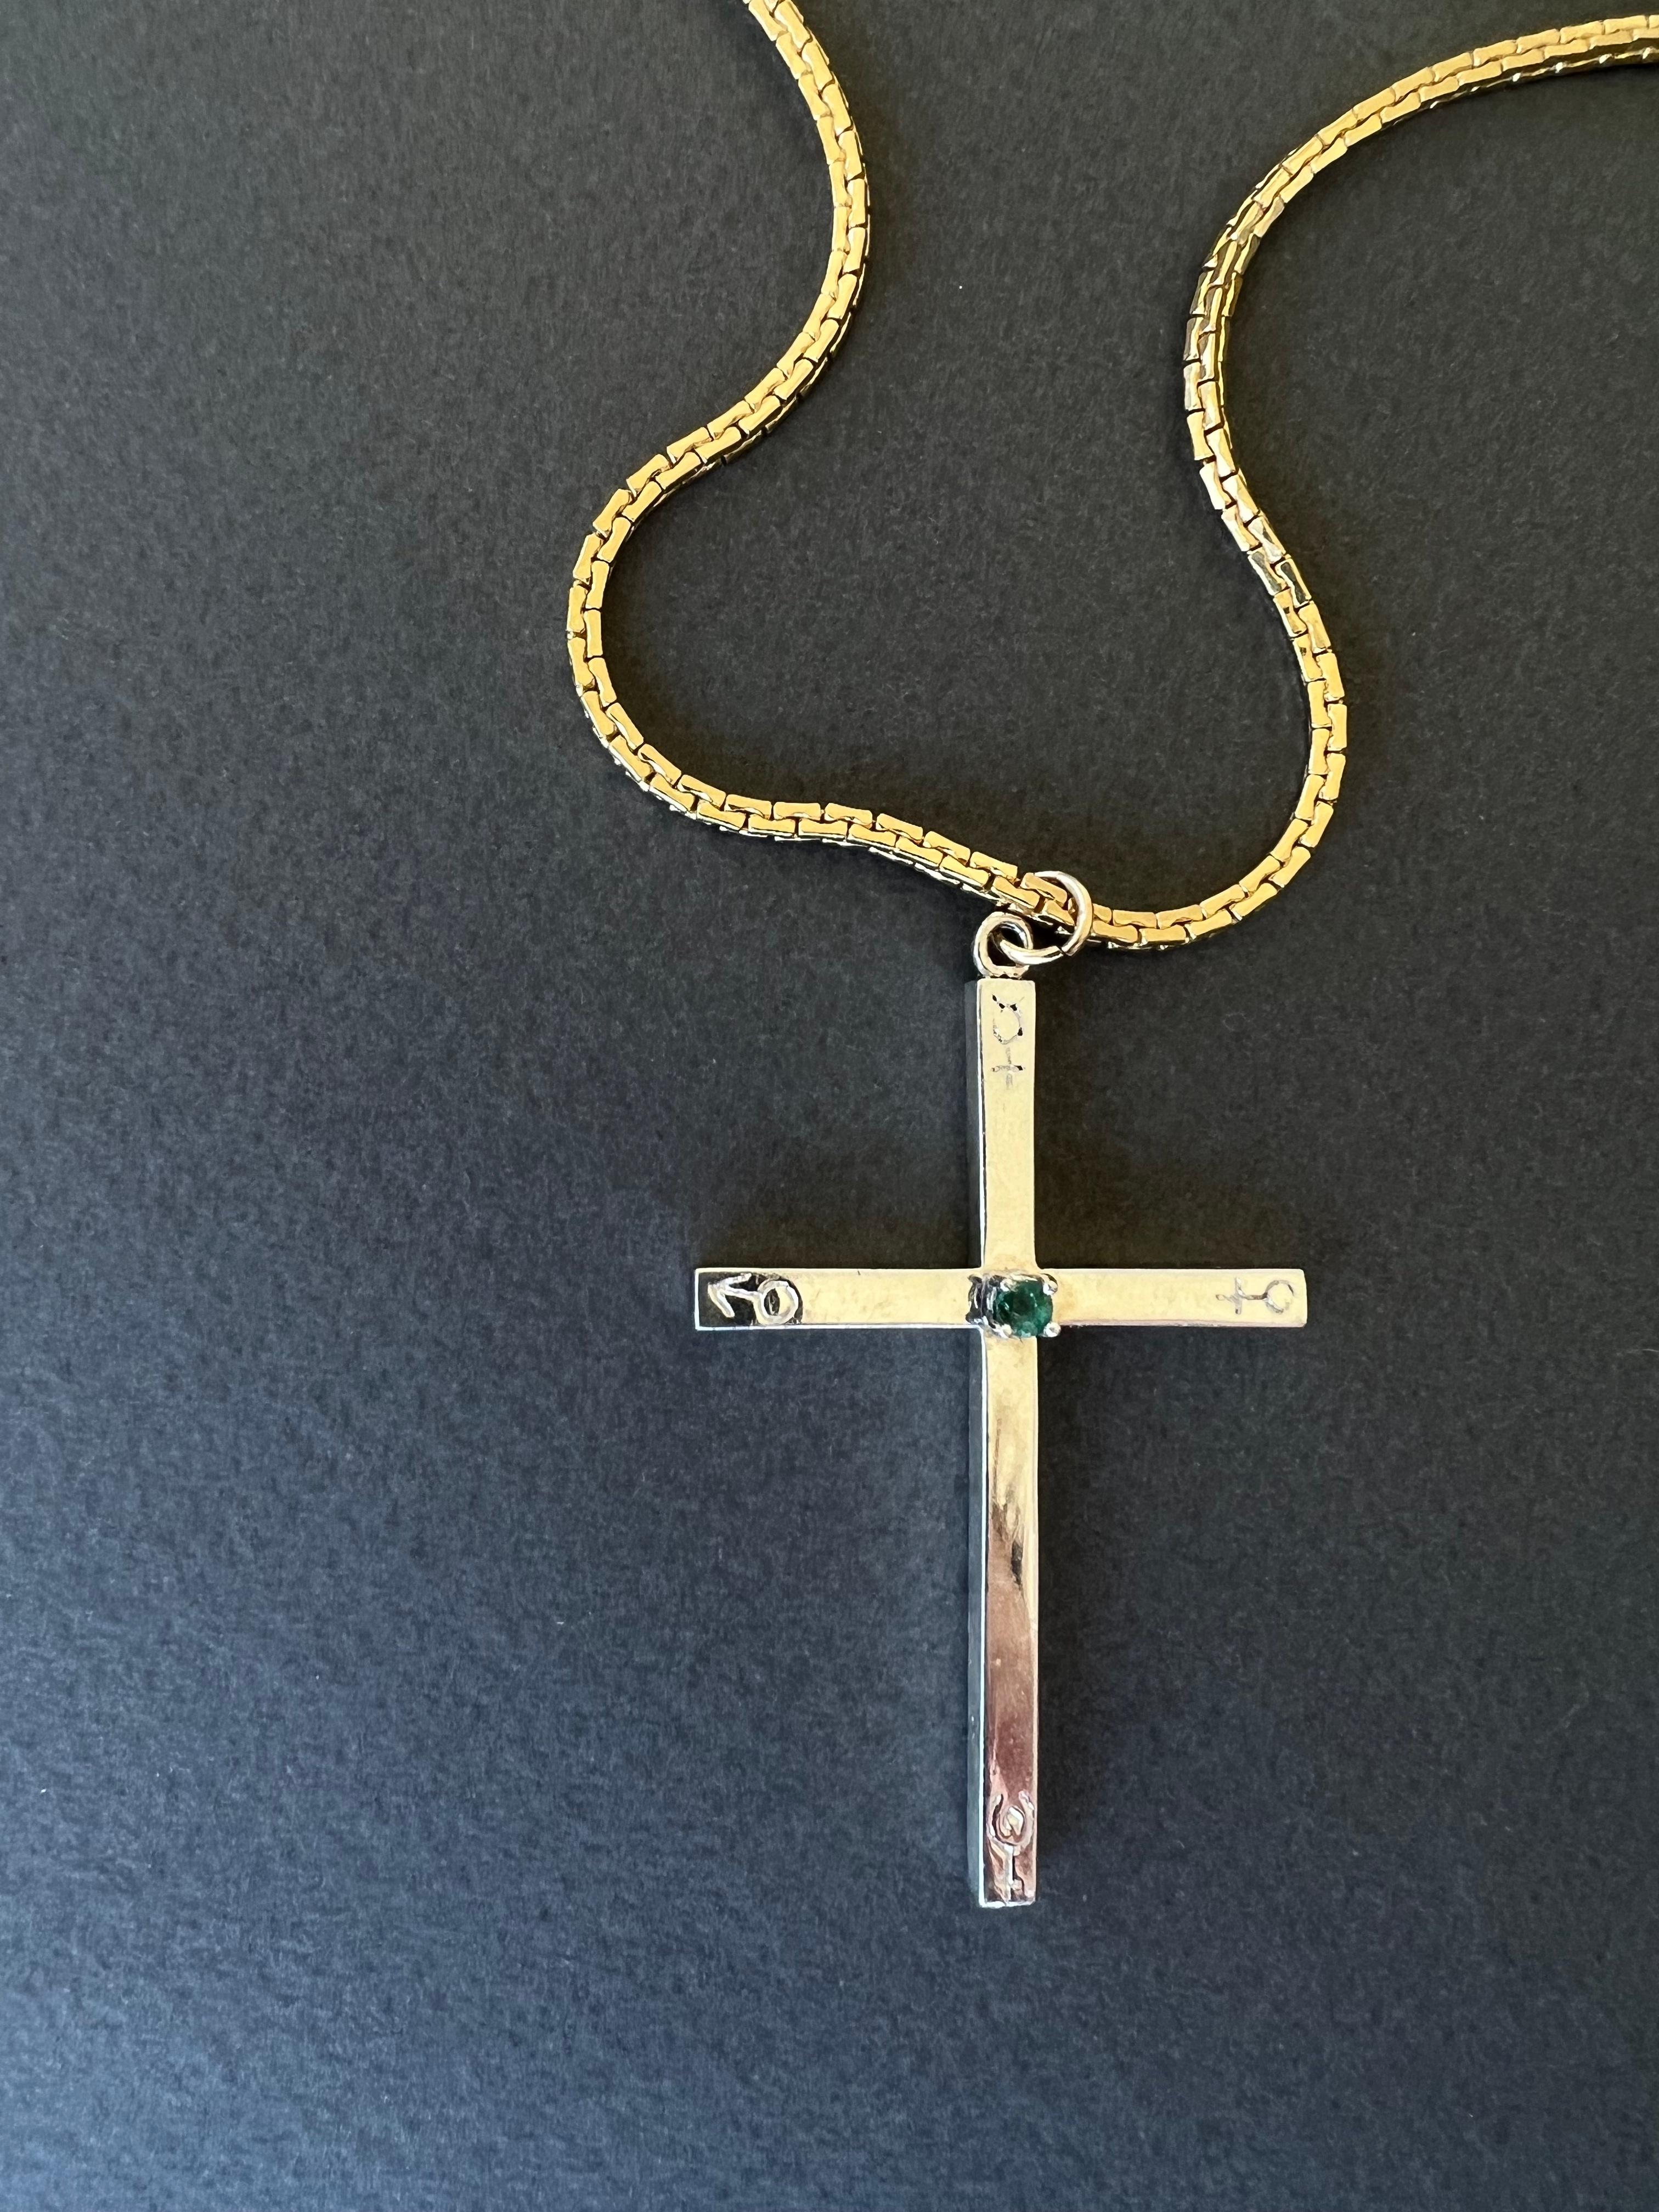 Women's or Men's Emerald Cross Necklace Engraved Astrology Symbols Spiritual Balance Healing For Sale